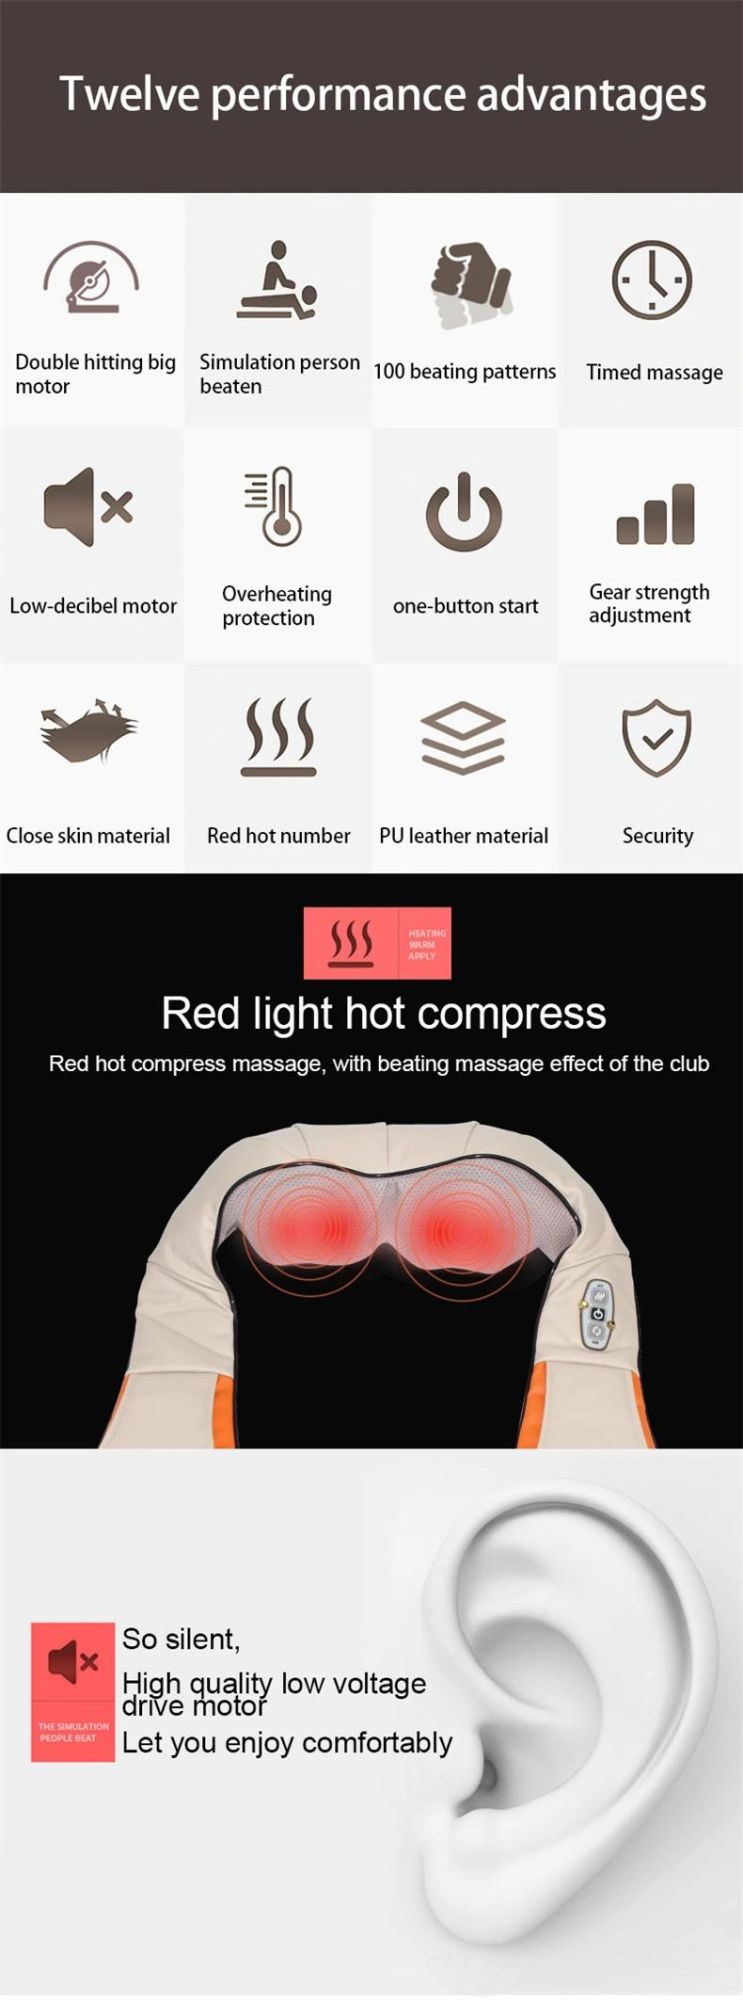 4D Shoulder Heated Portable Breo Amazon Pulse Device Shiatsu Neck Massager